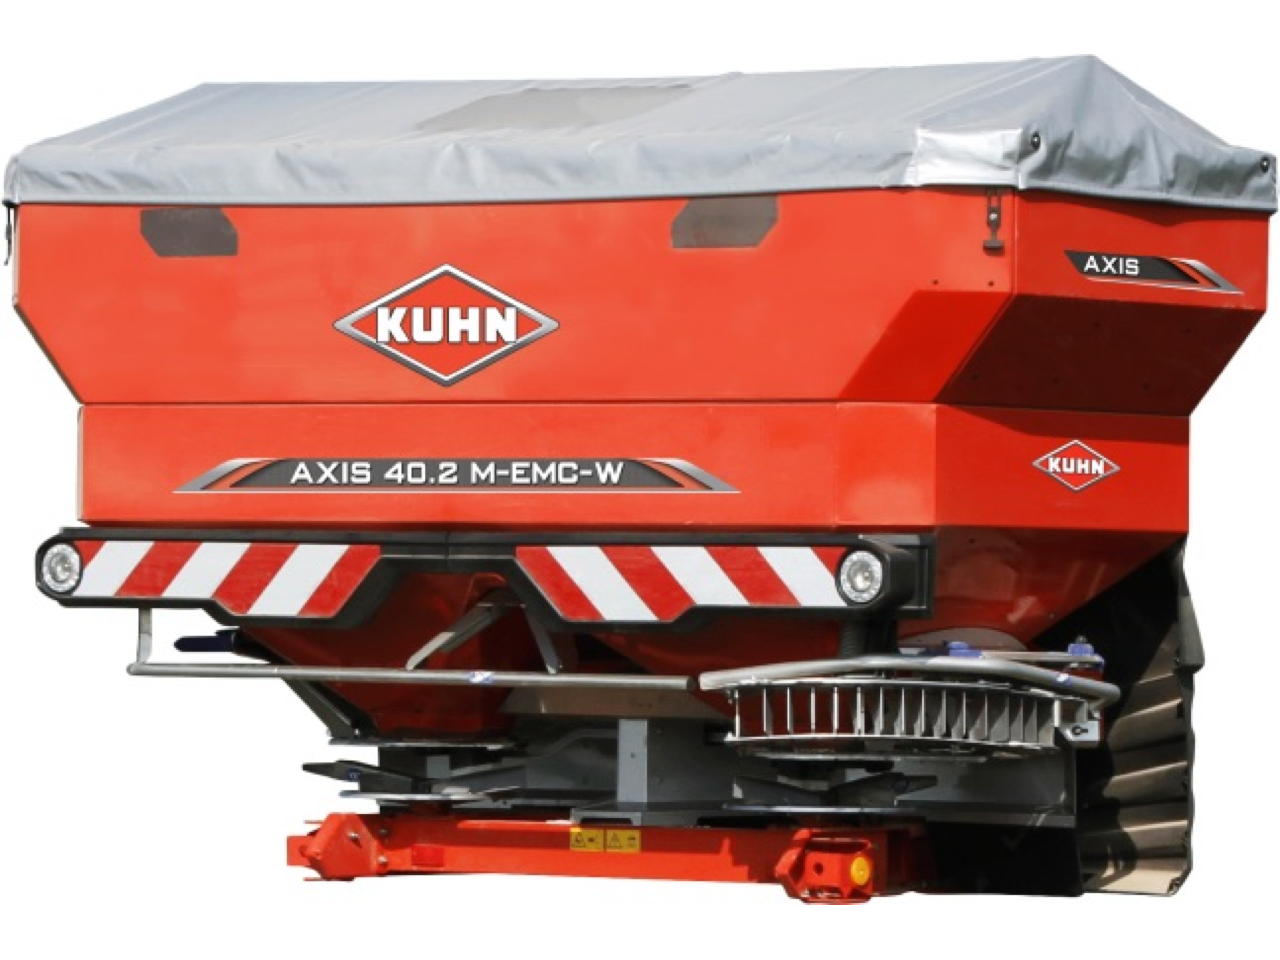 Kuhn Axis 40.2 M-EMC W